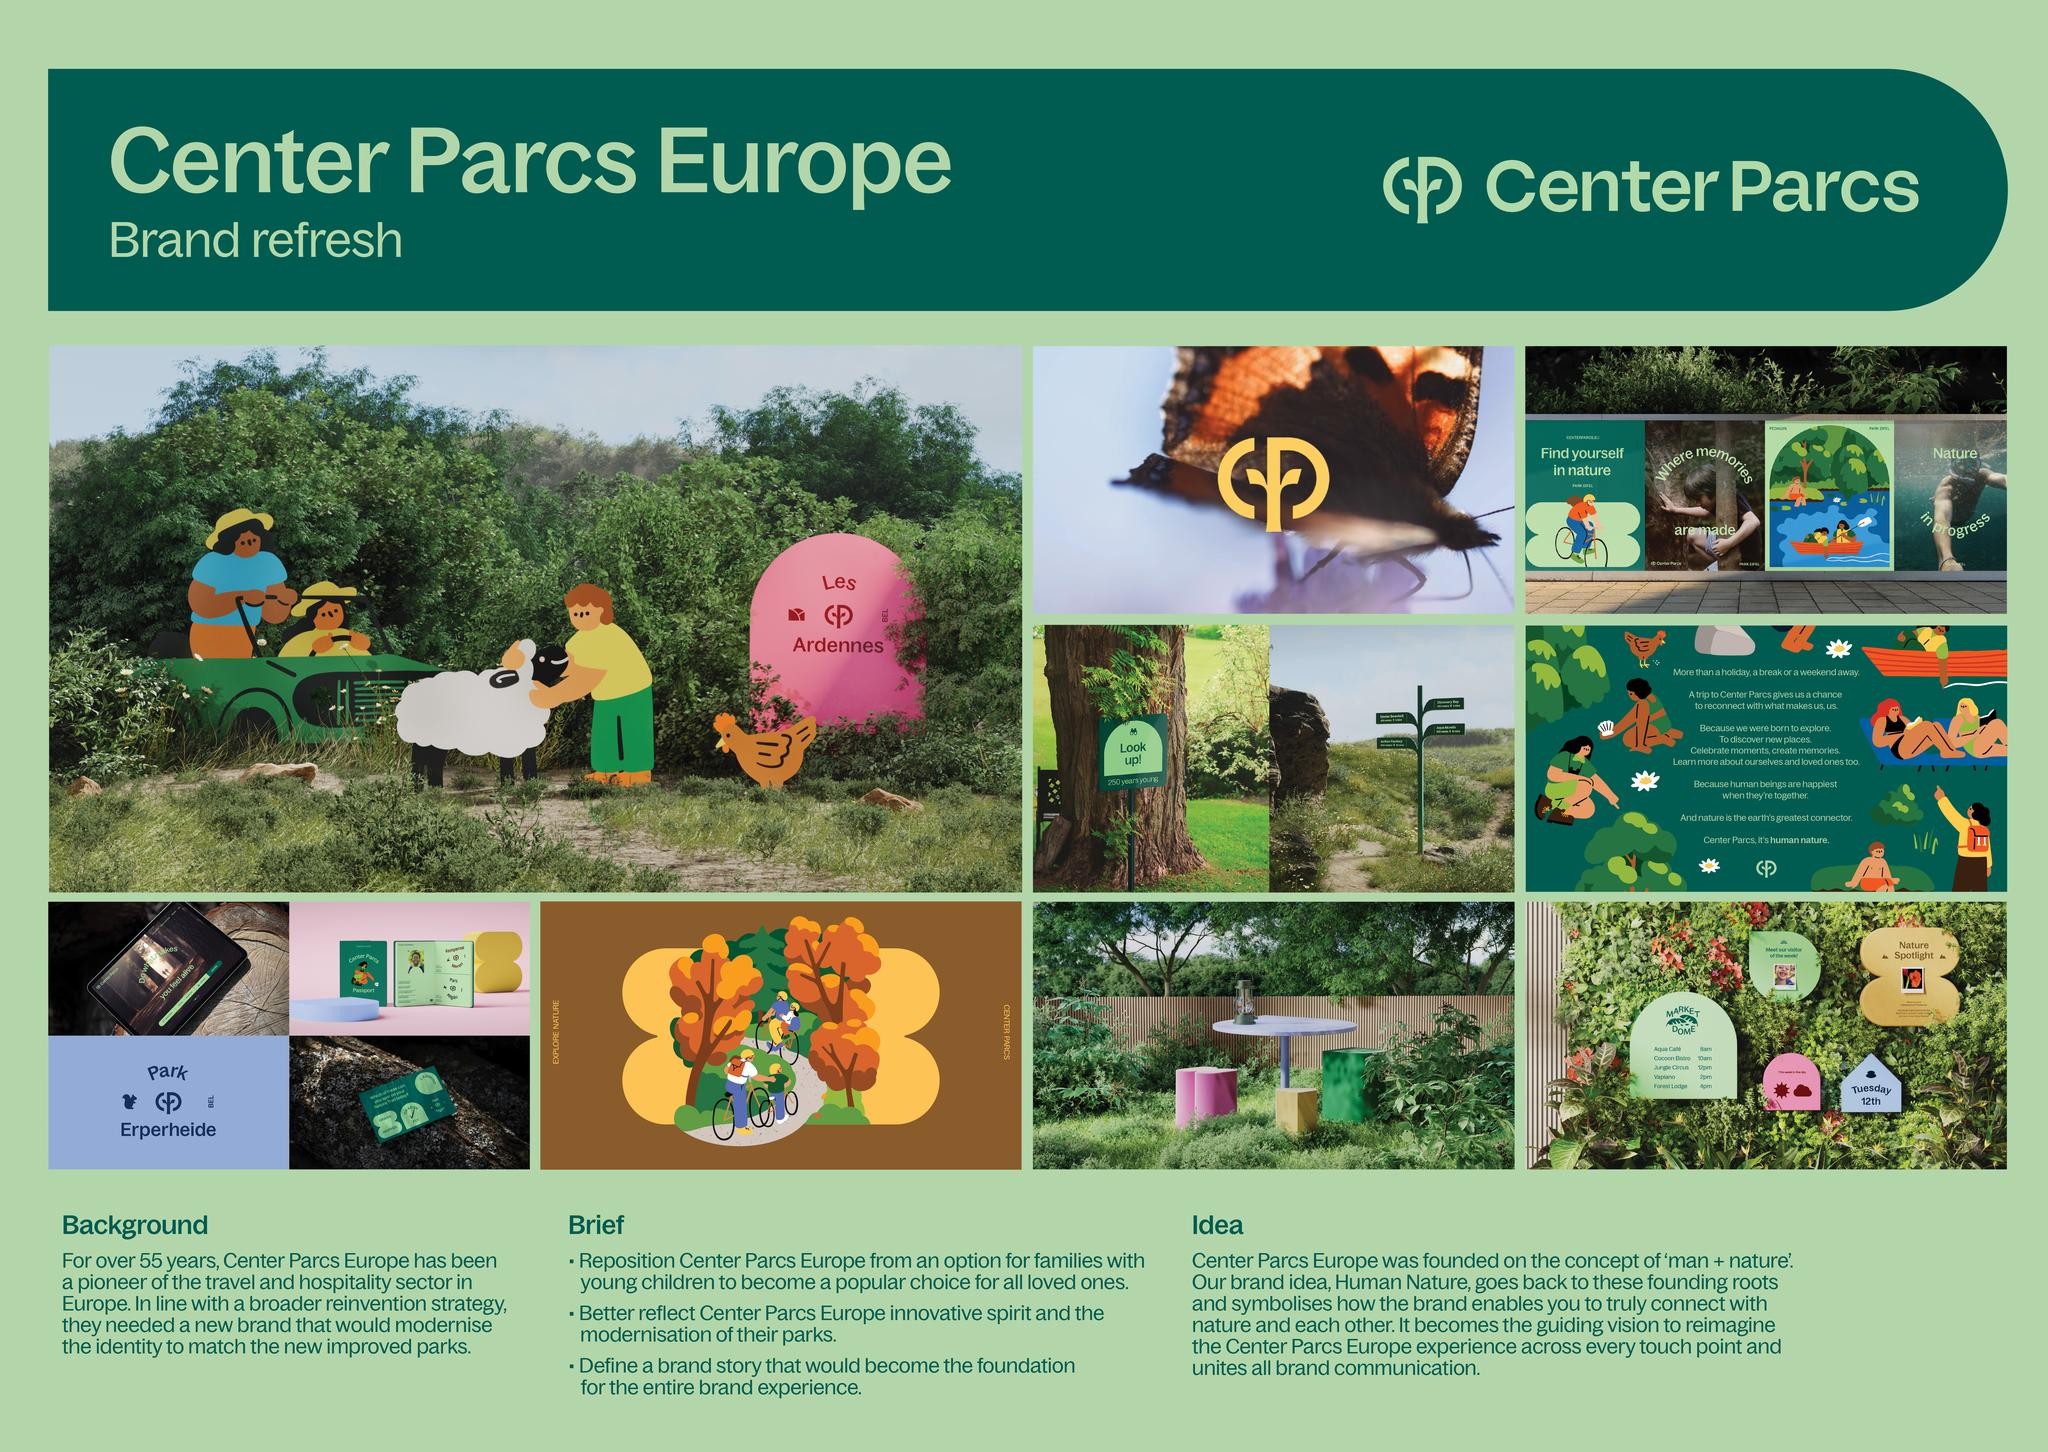 Center Parcs Europe: It's Human Nature